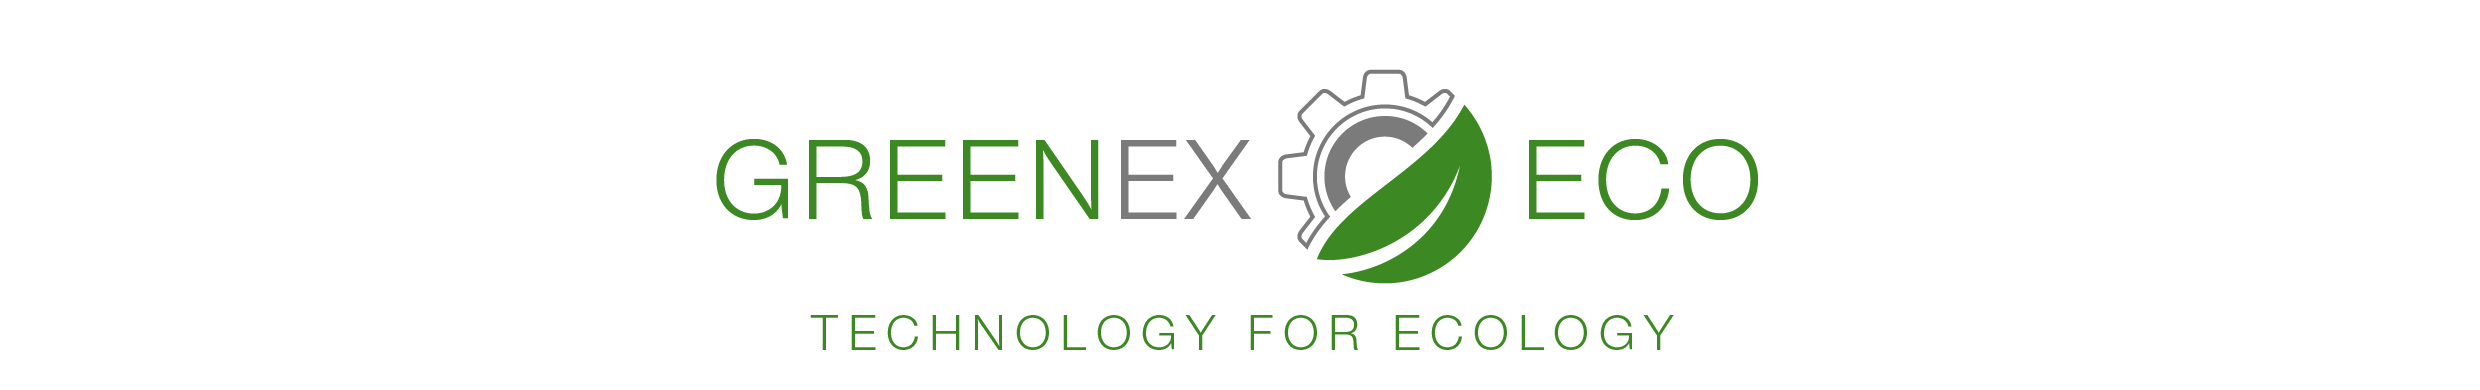 Greenex Eco logo